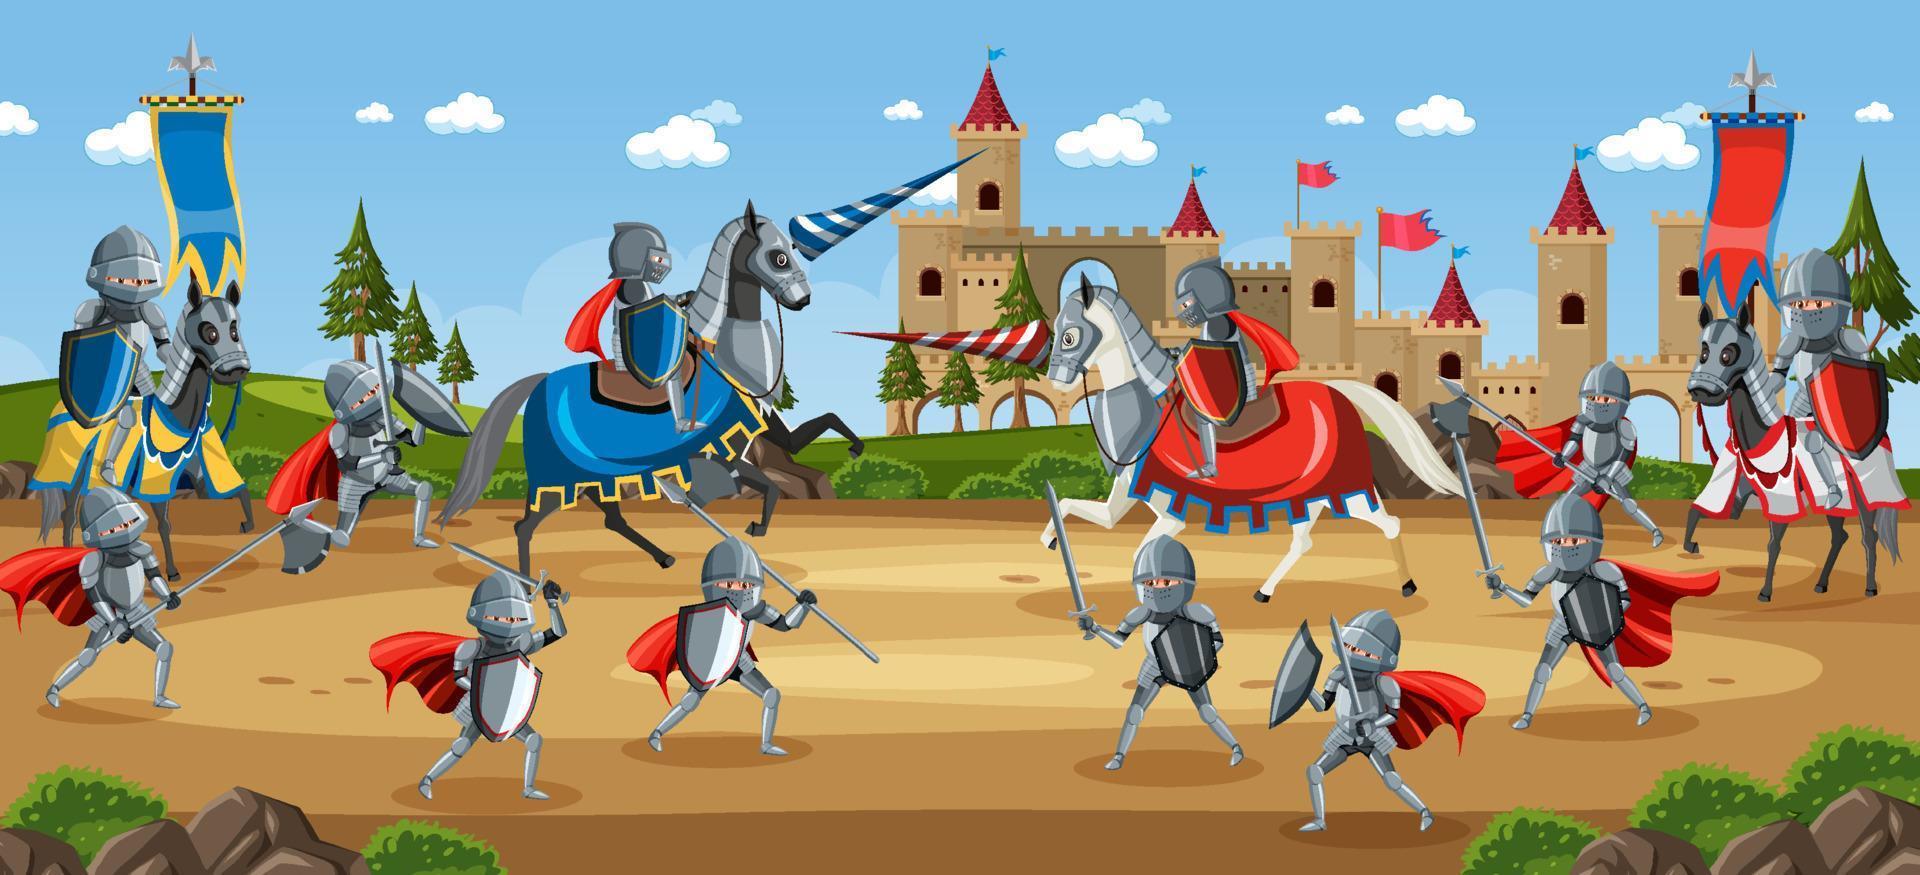 middeleeuwse riddertoernooi scene vector